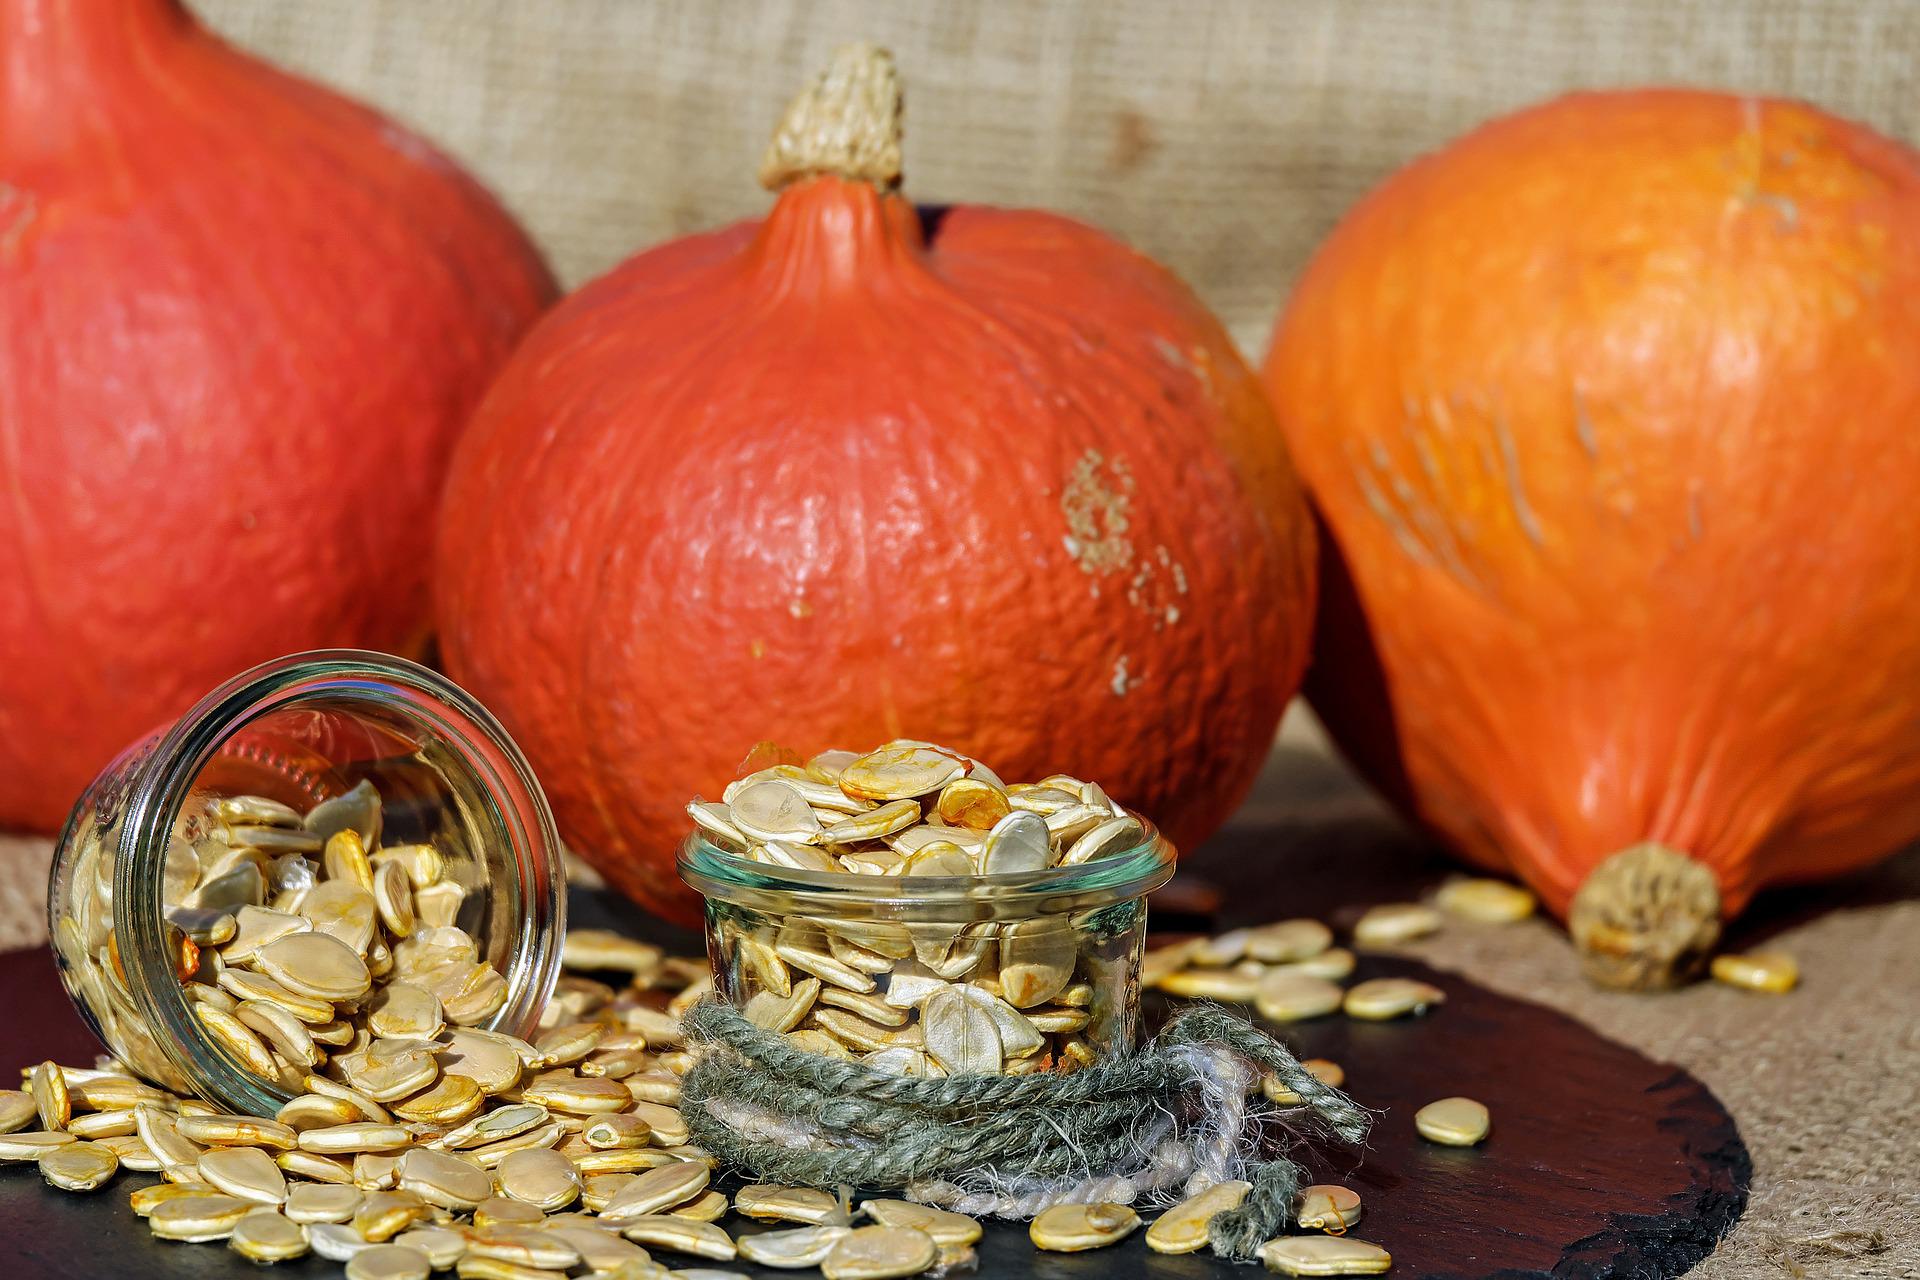 Easy Homemade Baked Pumpkin Seeds Recipe